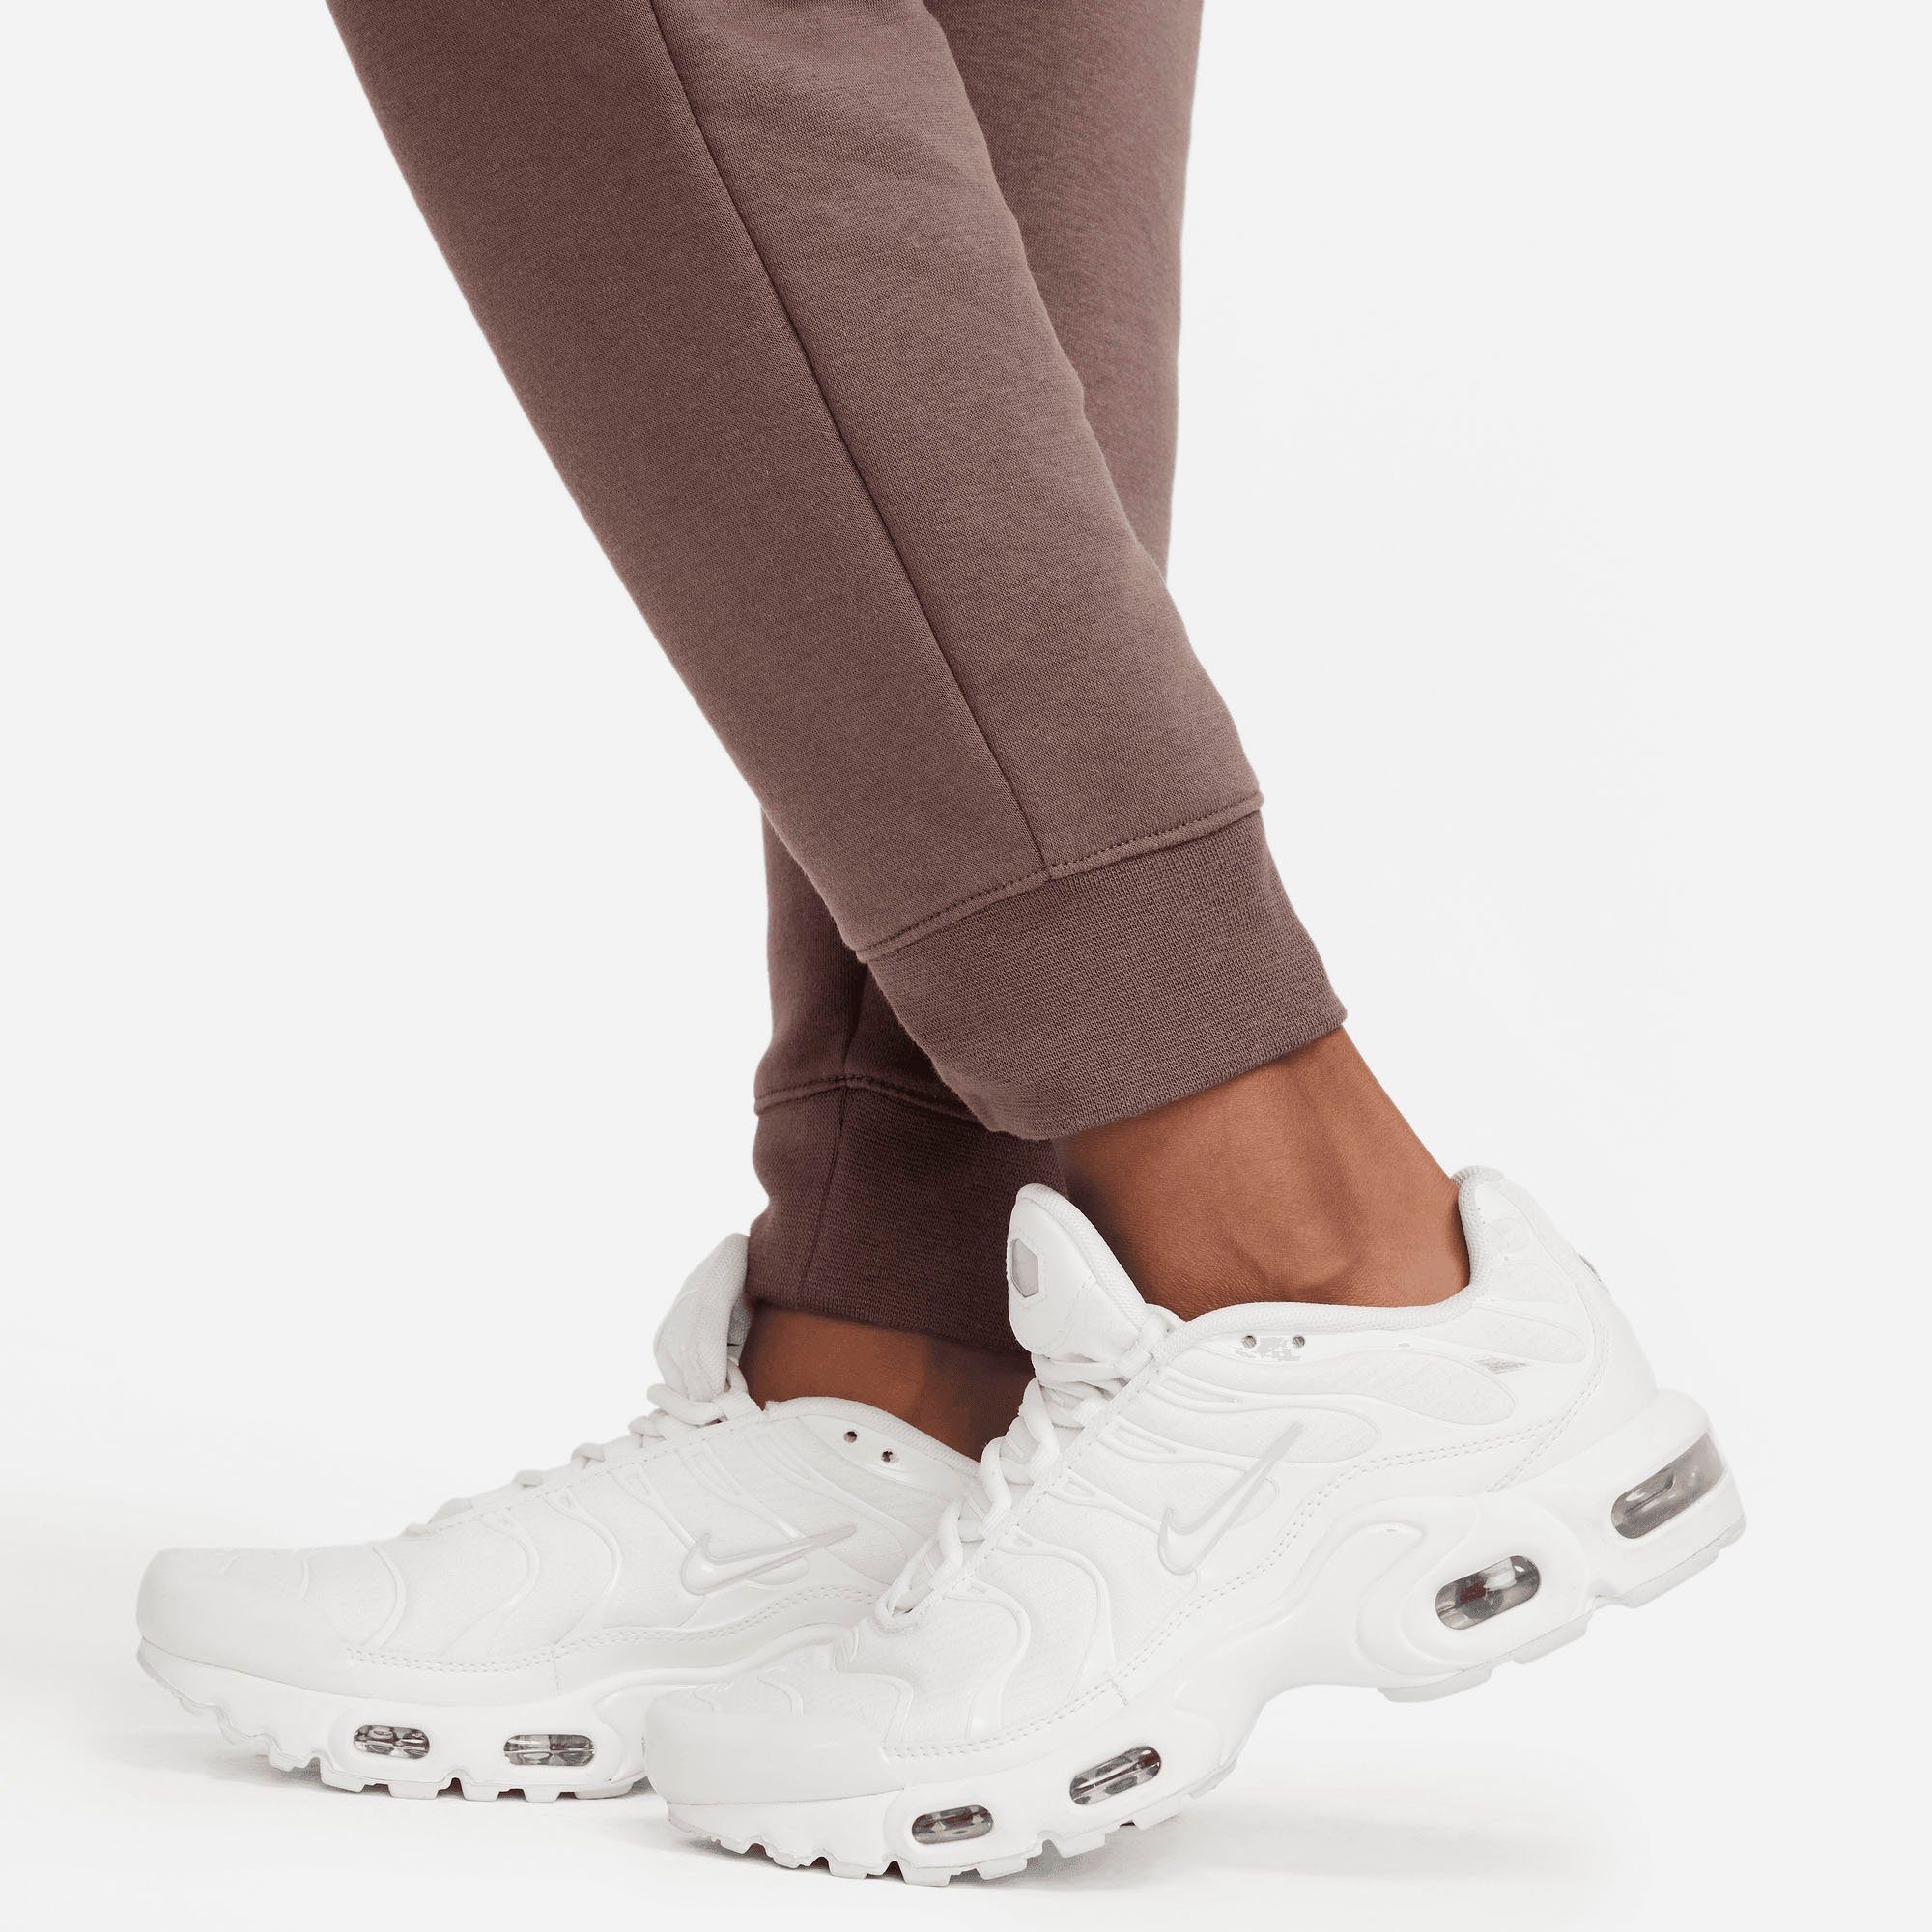 Club PLUM Sportswear Pants Fleece Nike ECLIPSE/WHITE Big Kids' Jogginghose (Girls)